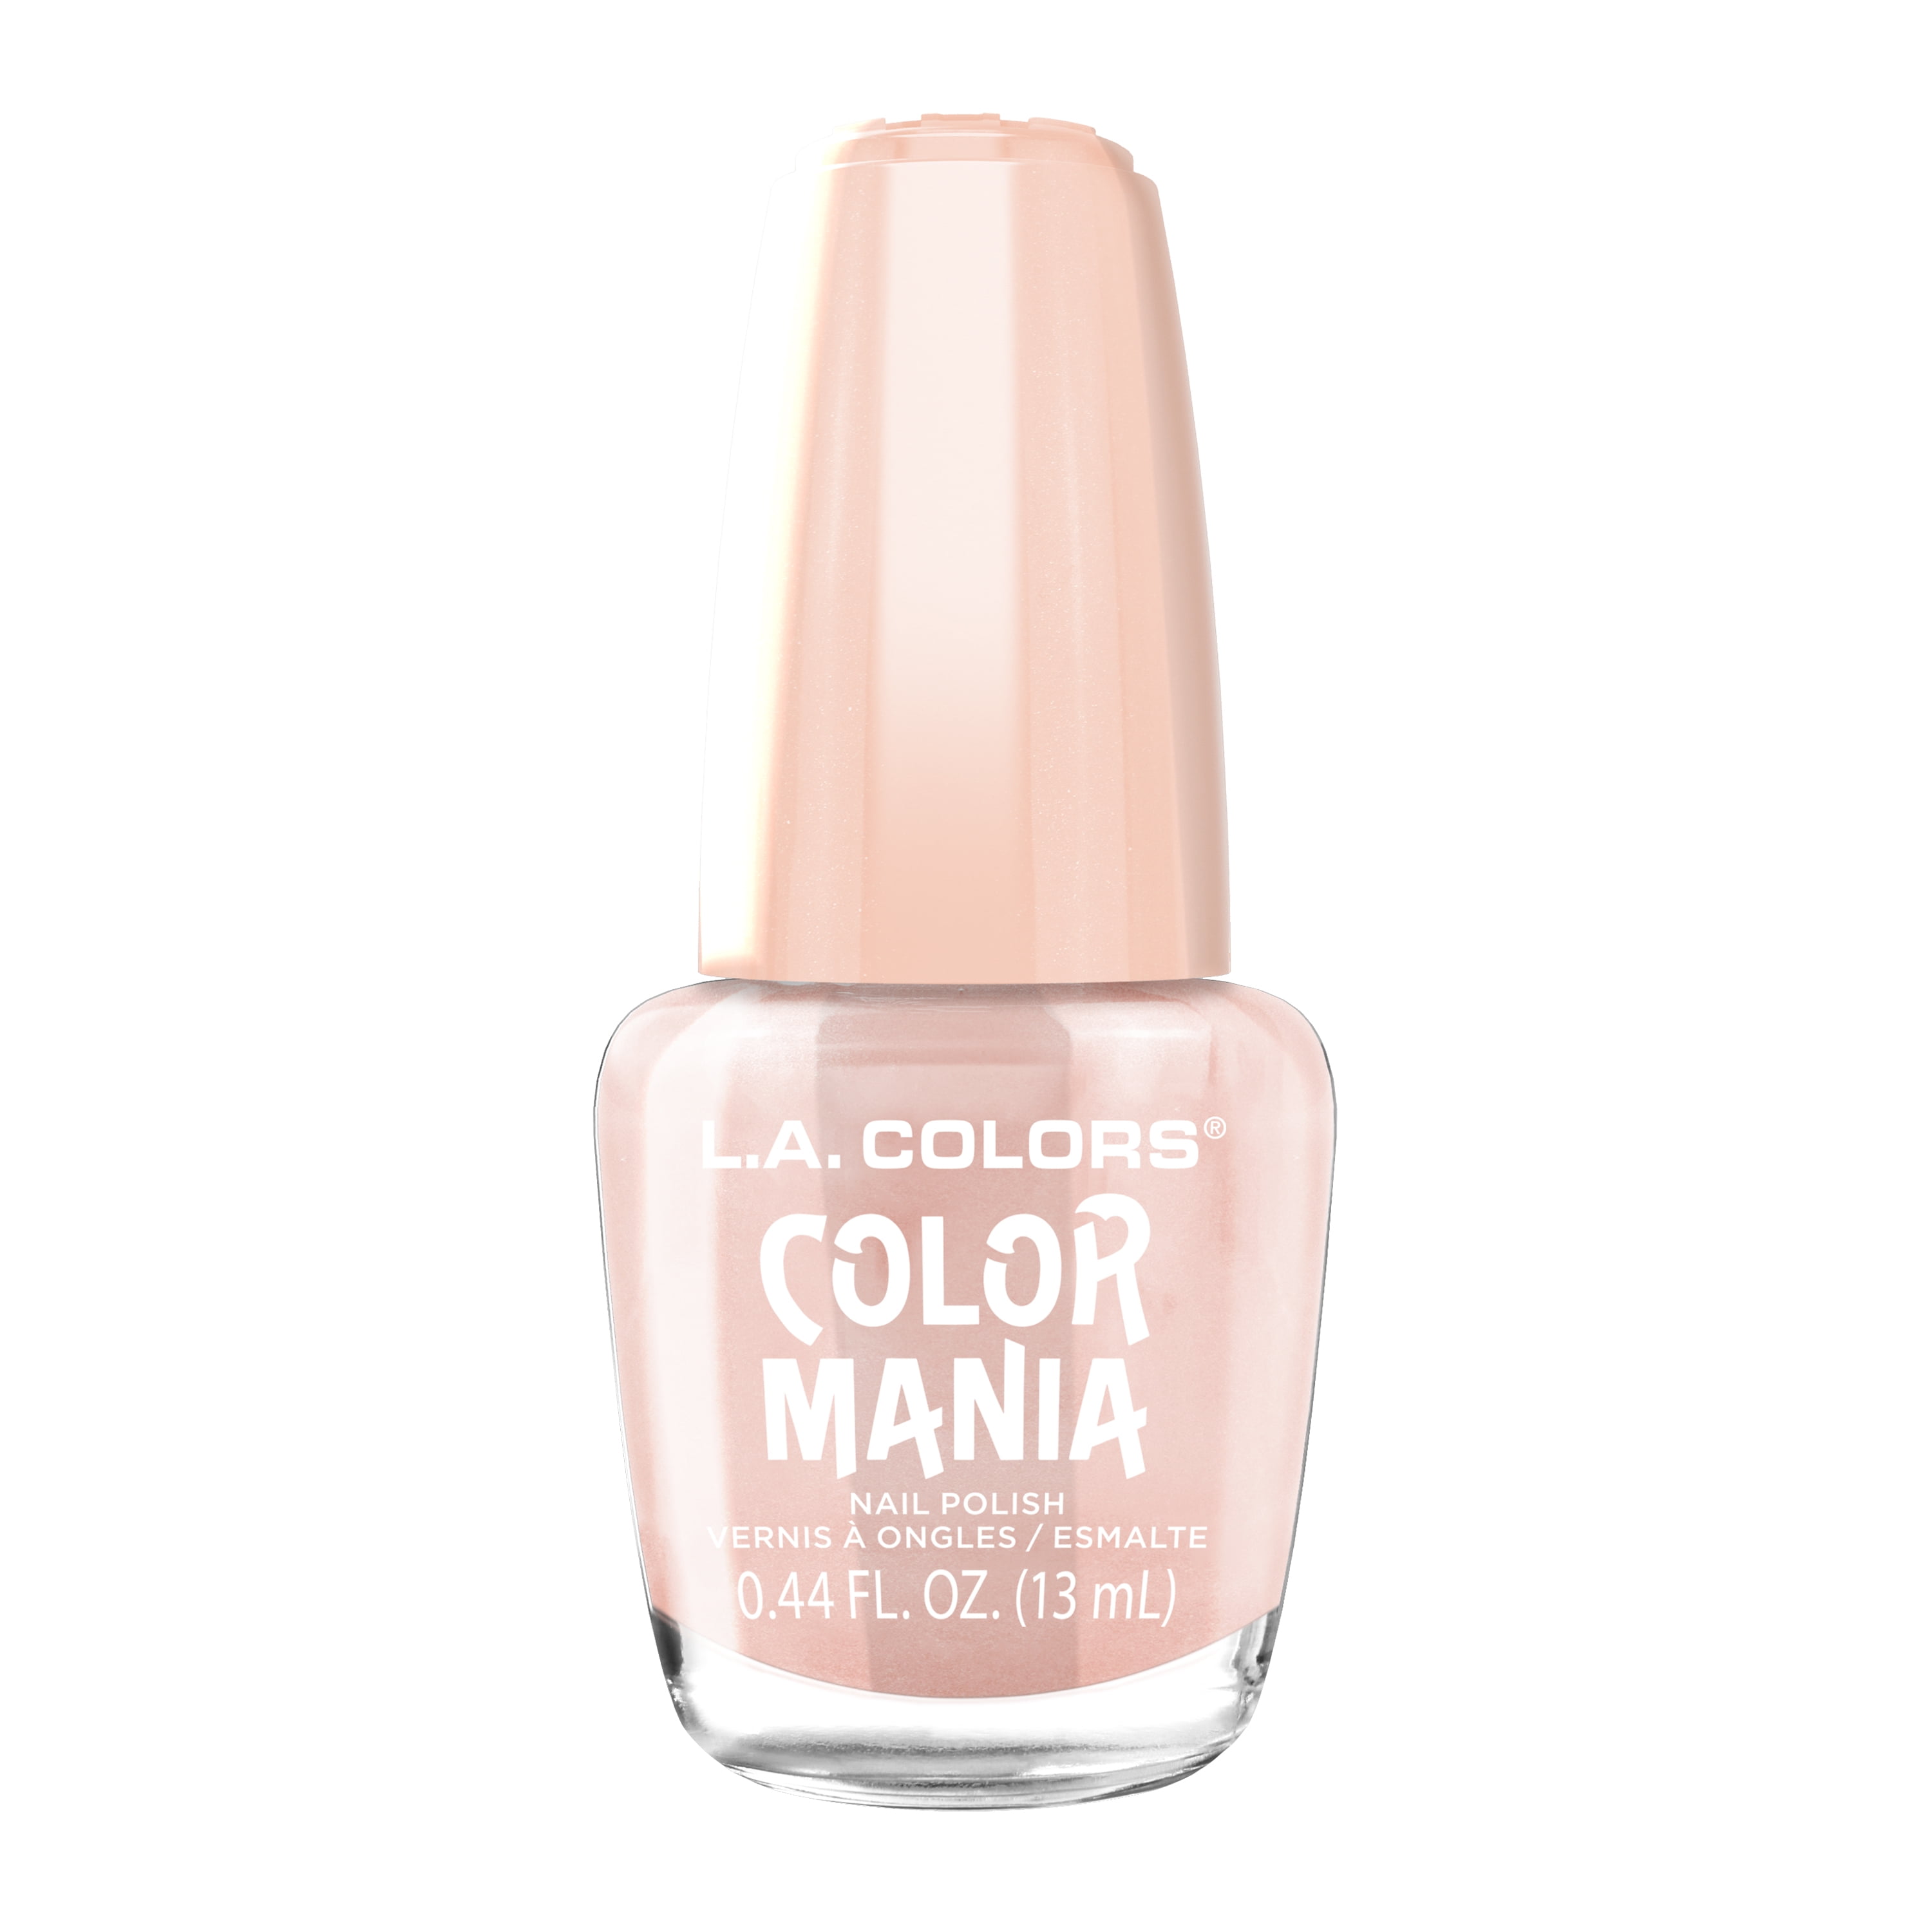 Armani beauty new blush review, shade (mania 40). #fyp #viral #greene... |  TikTok